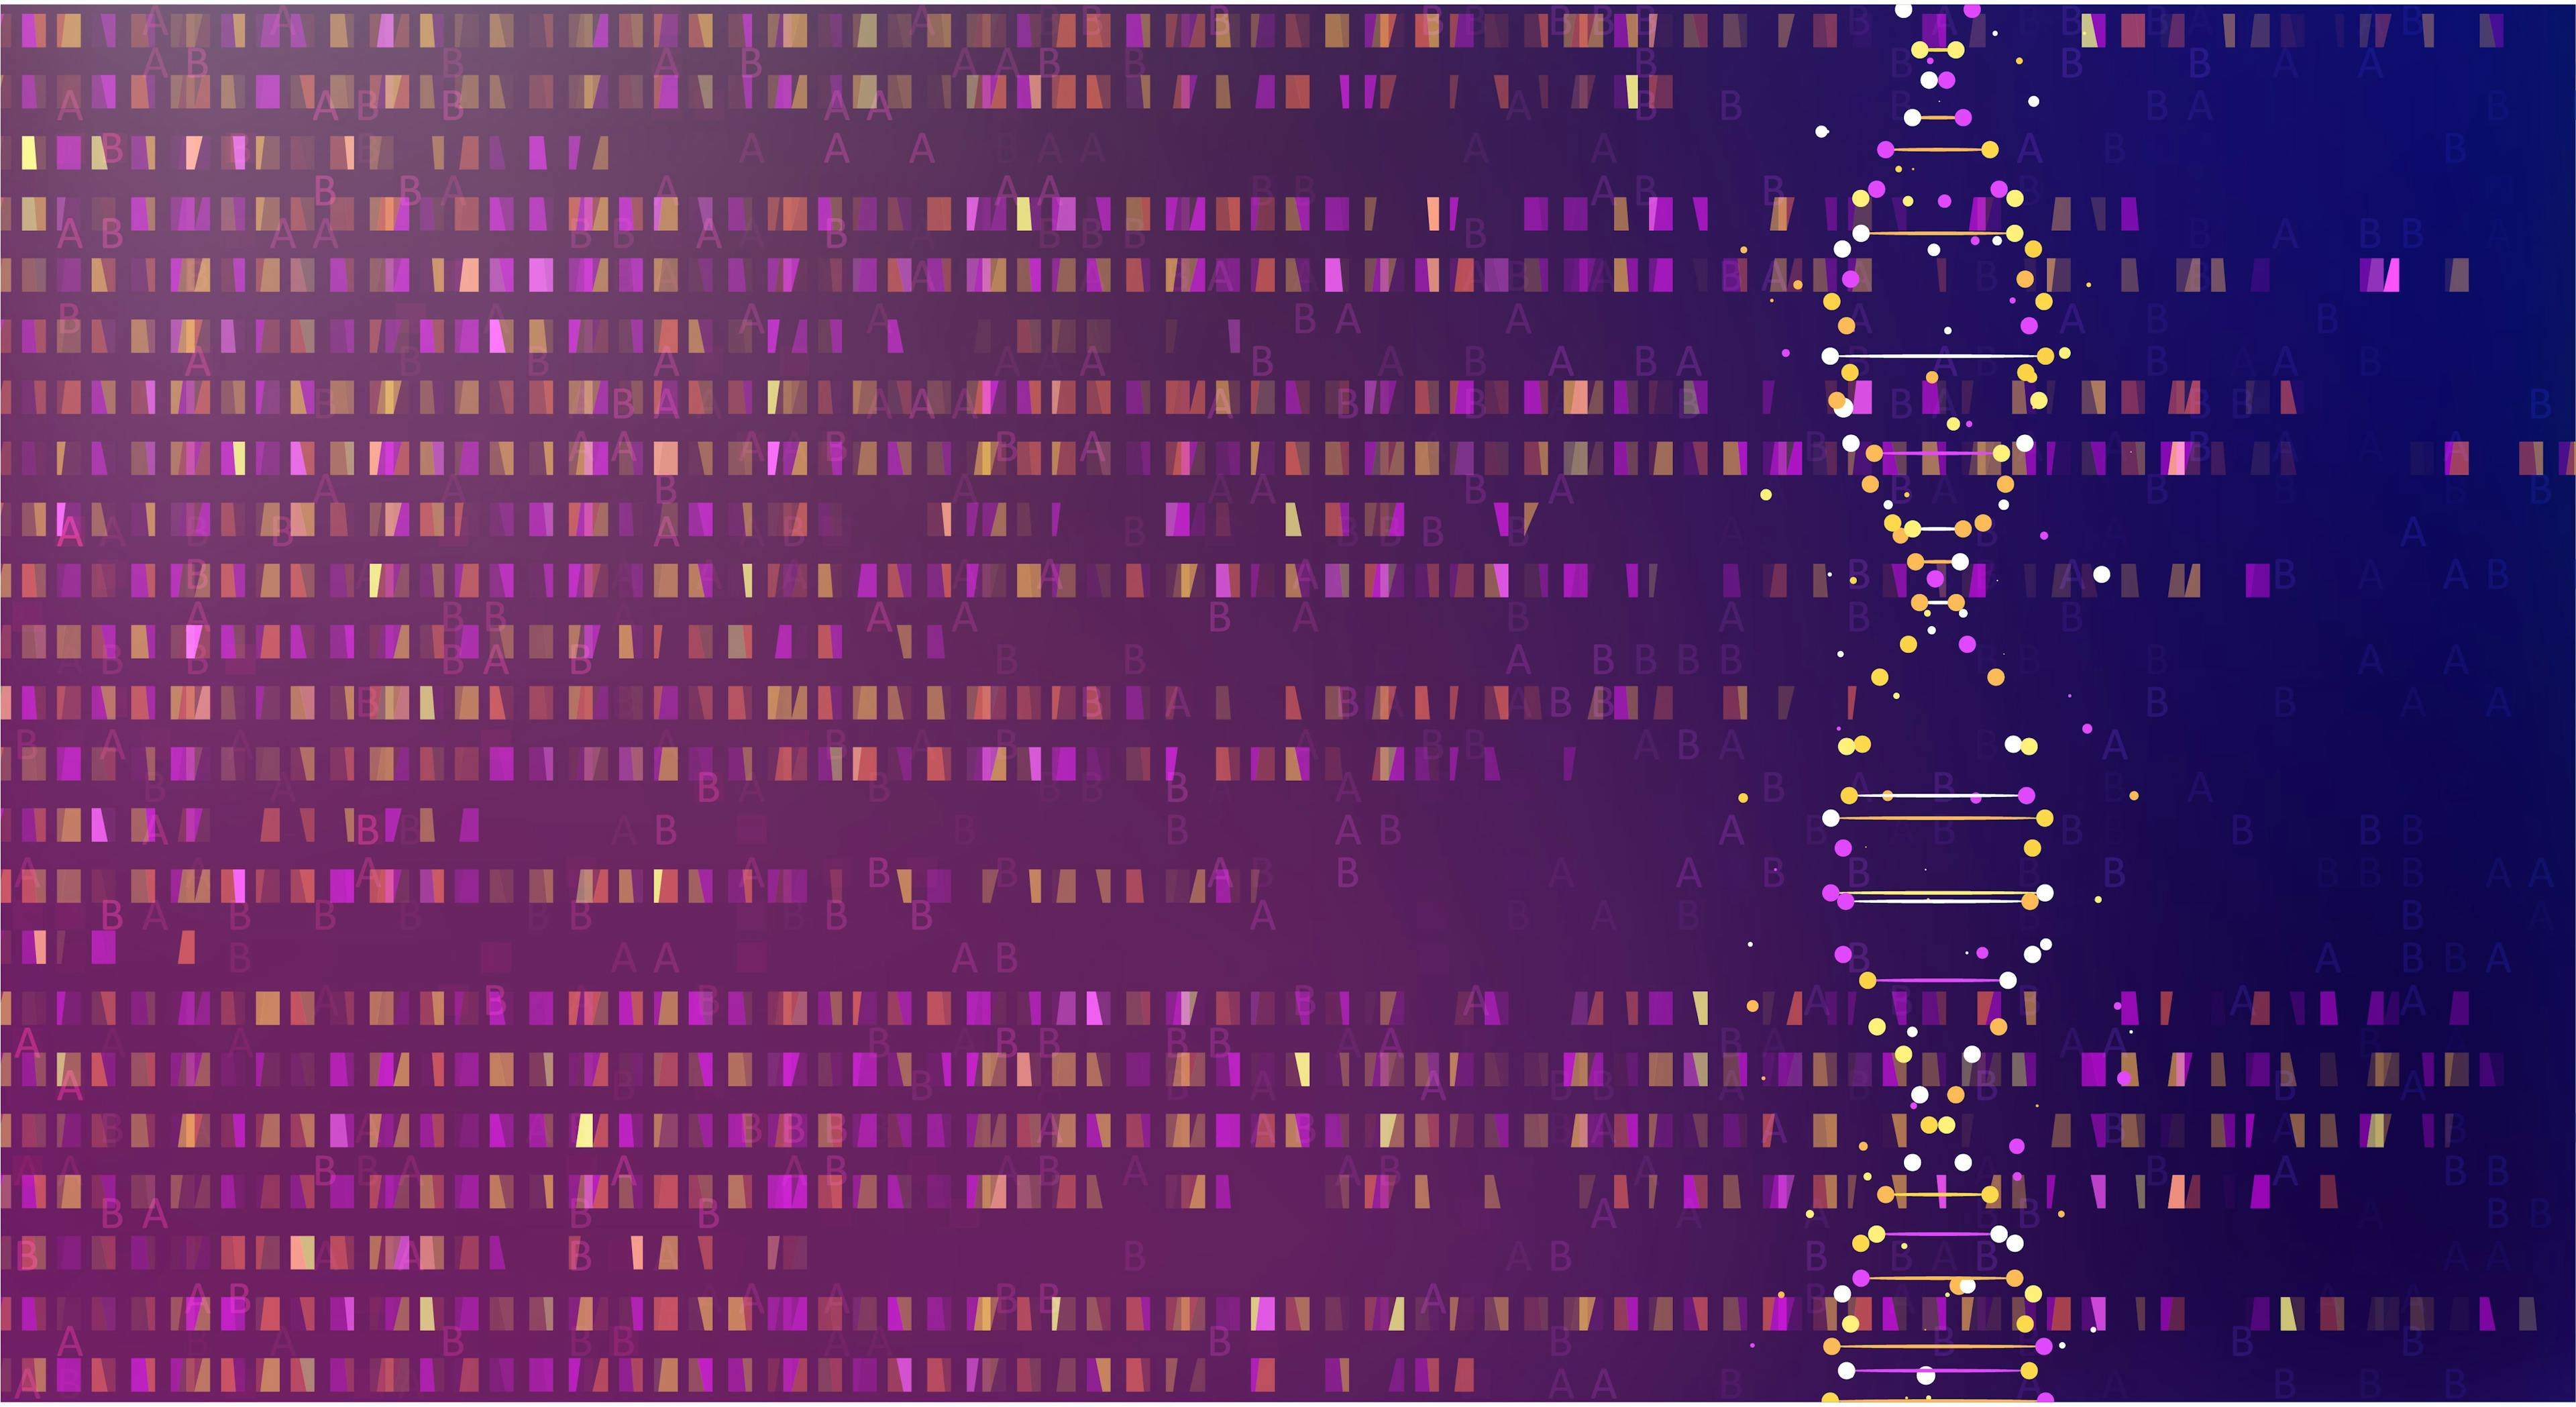 Big genomic data visualization: © majcot - stock.adobe.com